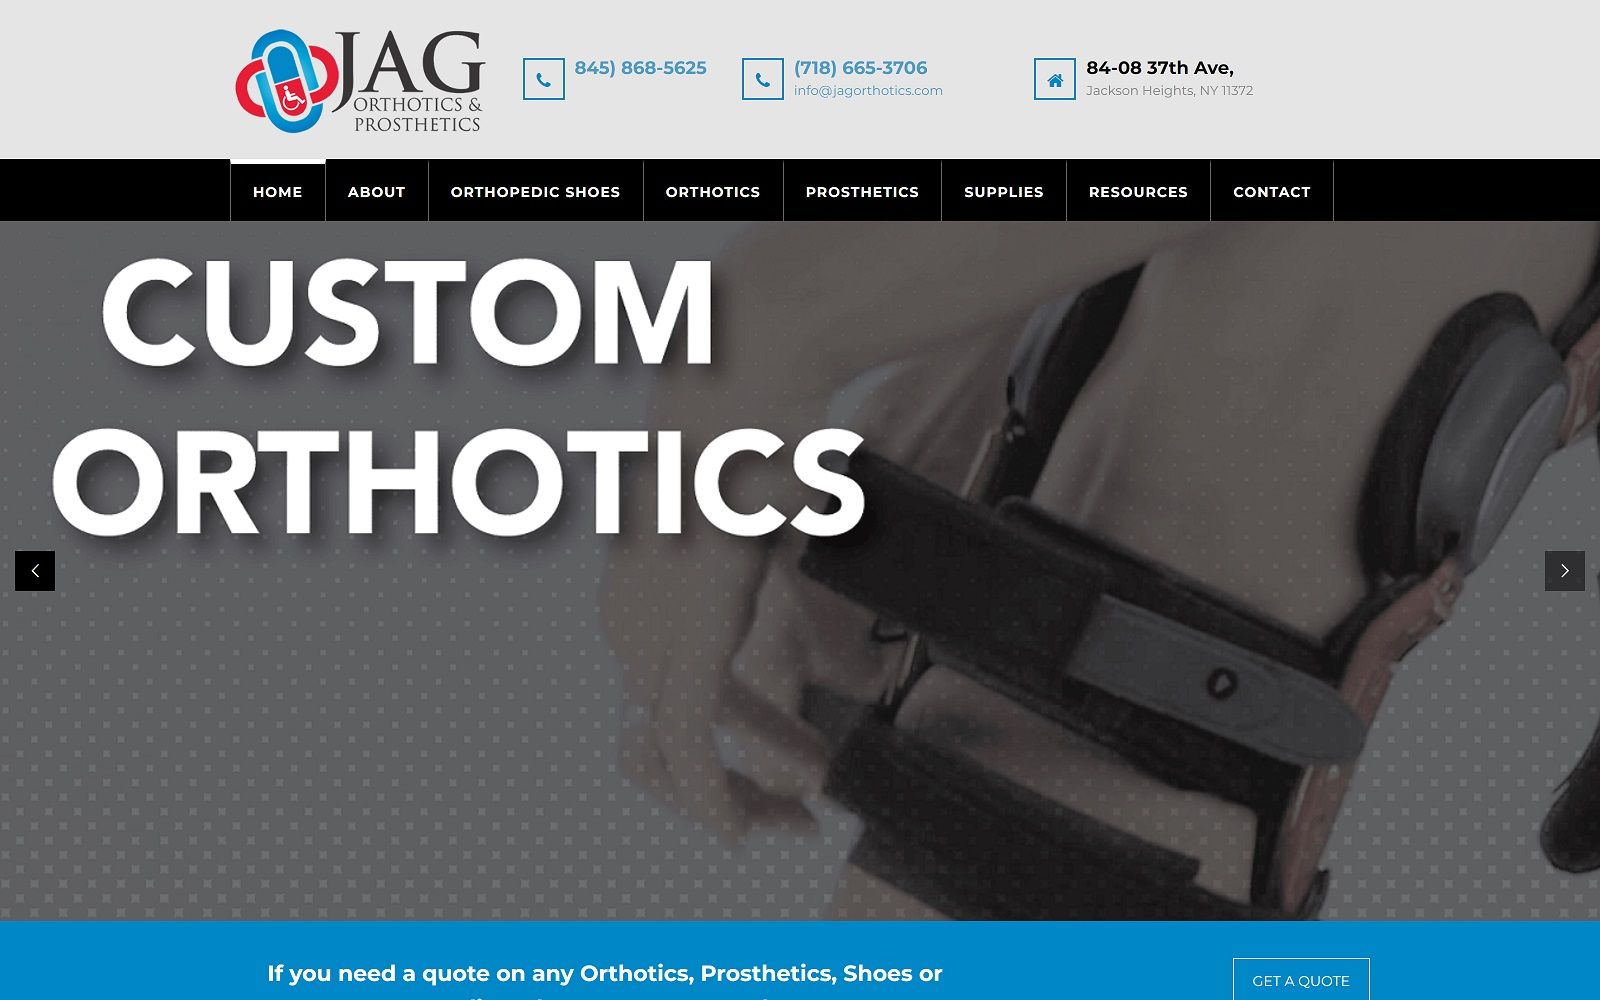 jagorthotics.com screenshot